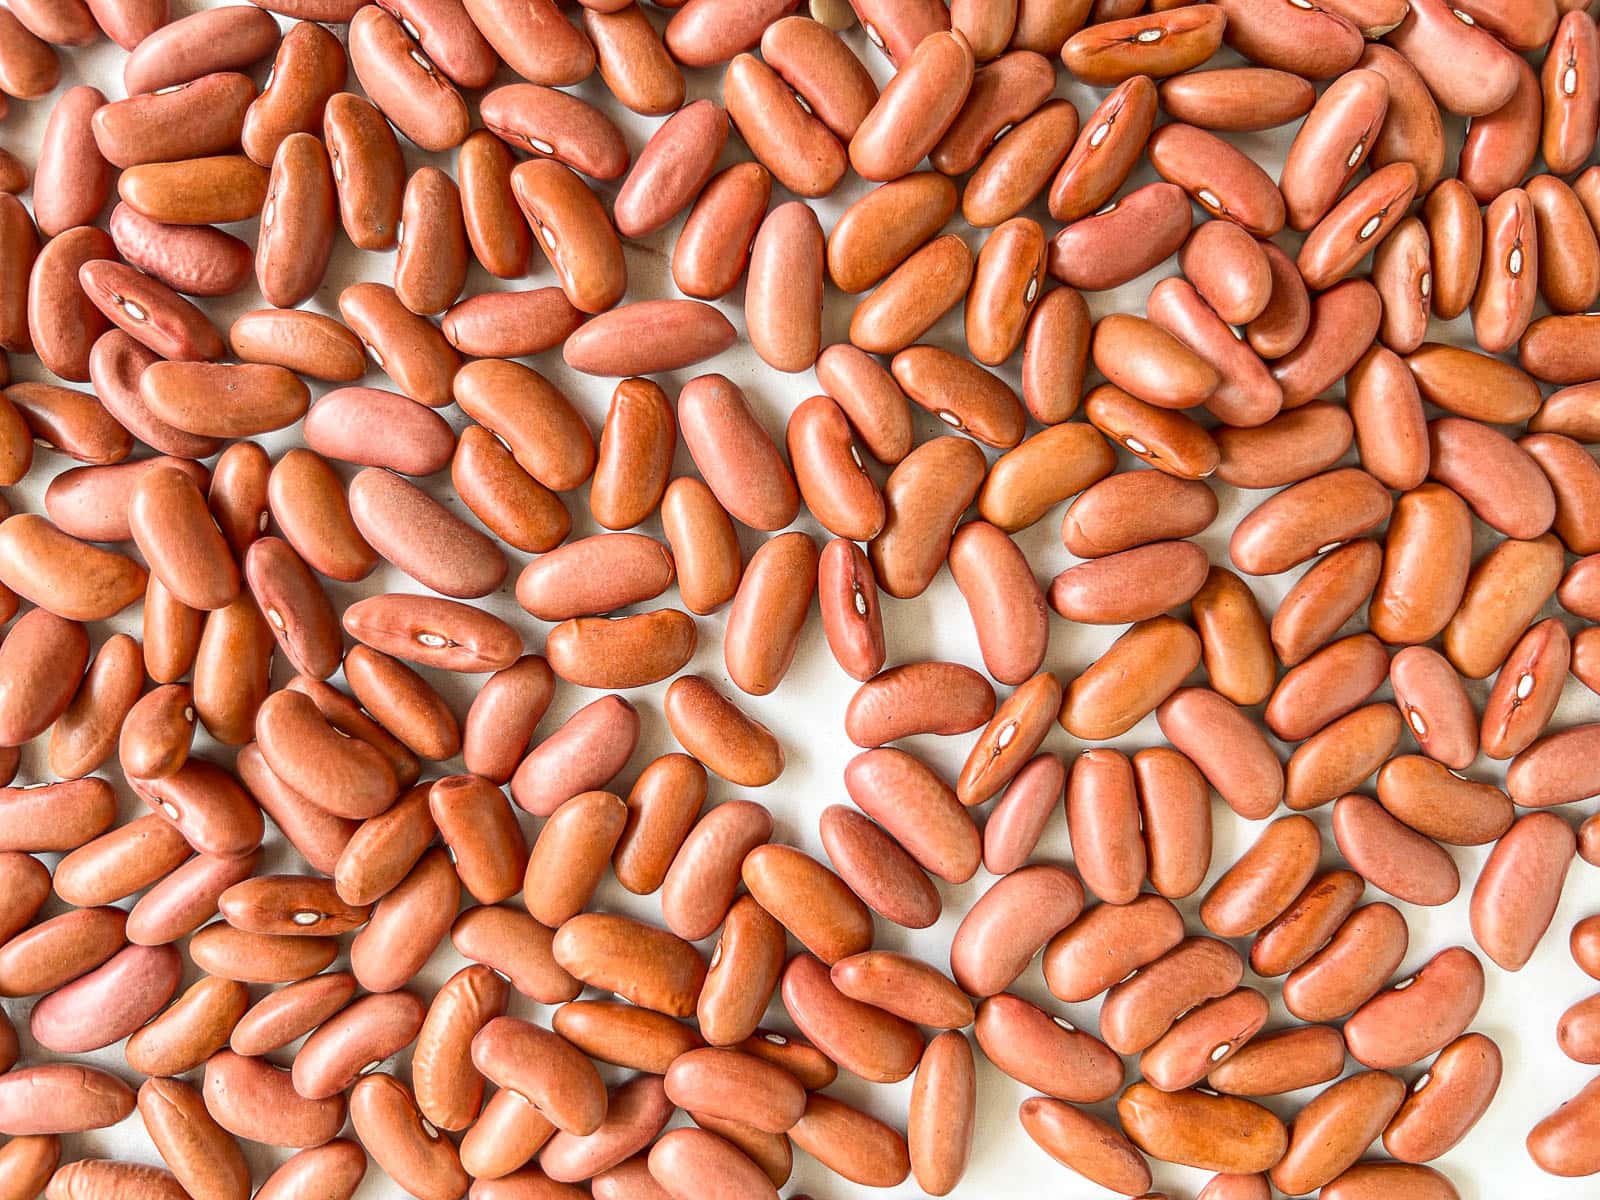 dried kidney beans spread across a table.